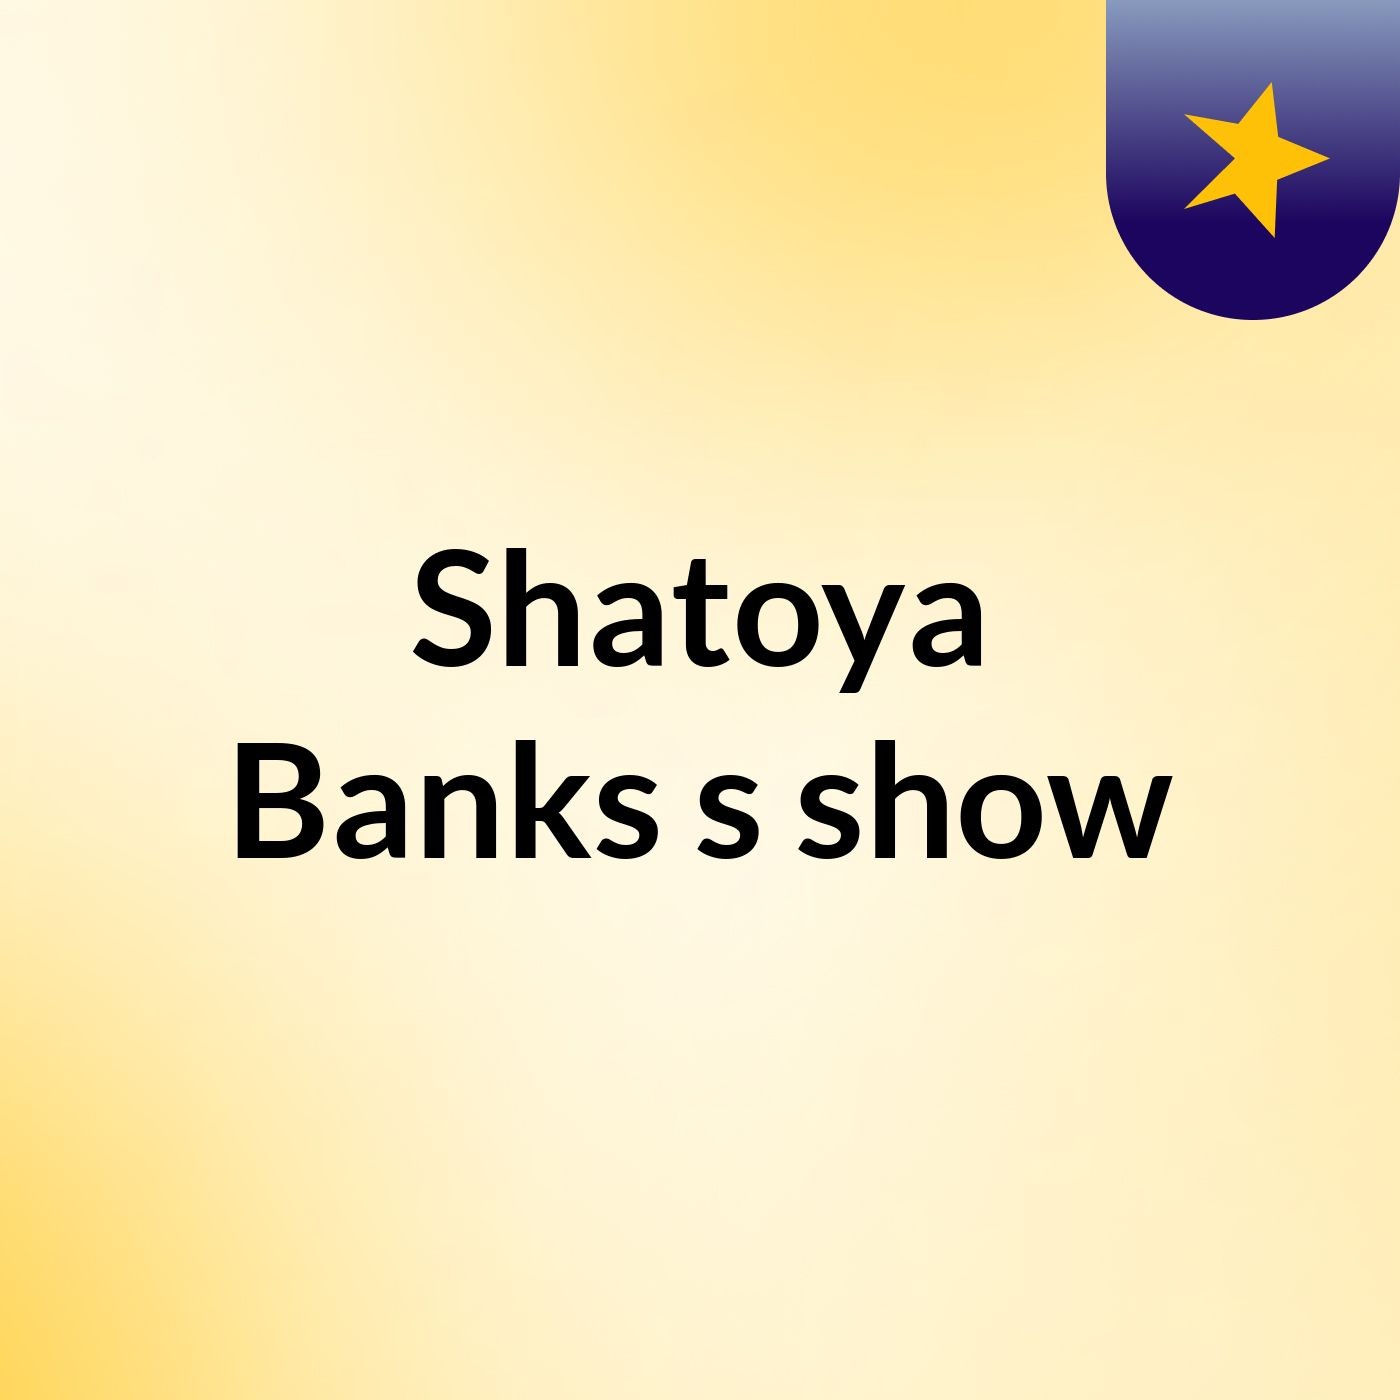 Shatoya Banks's show